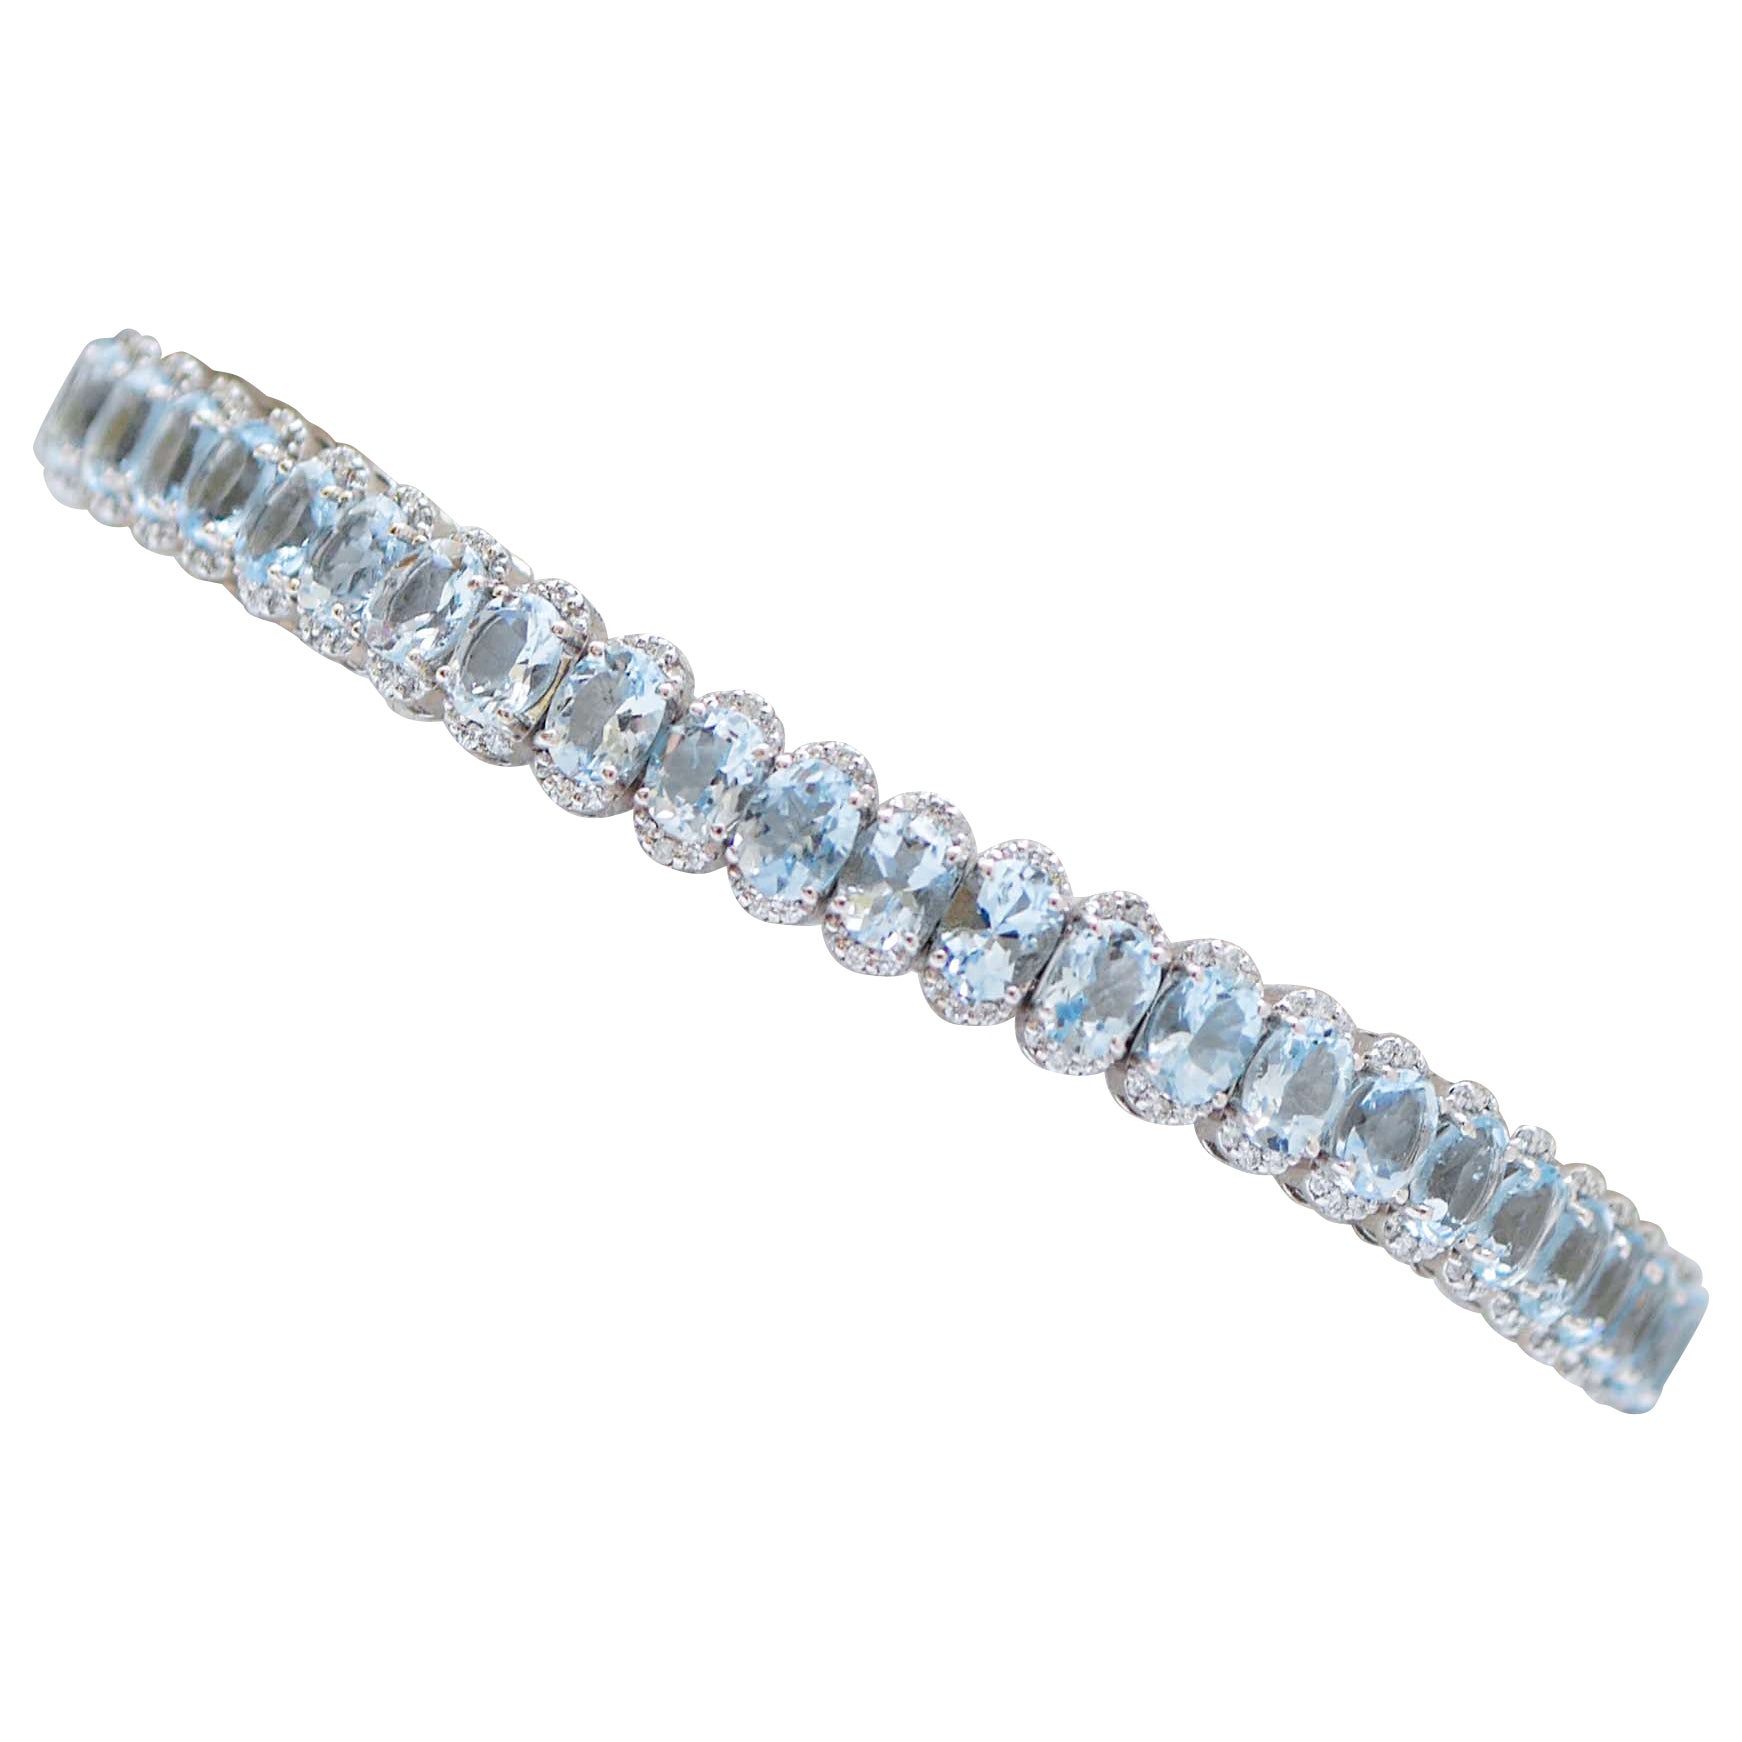 Aquamarine, Diamonds, 18 Karat White Gold Bracelet. For Sale